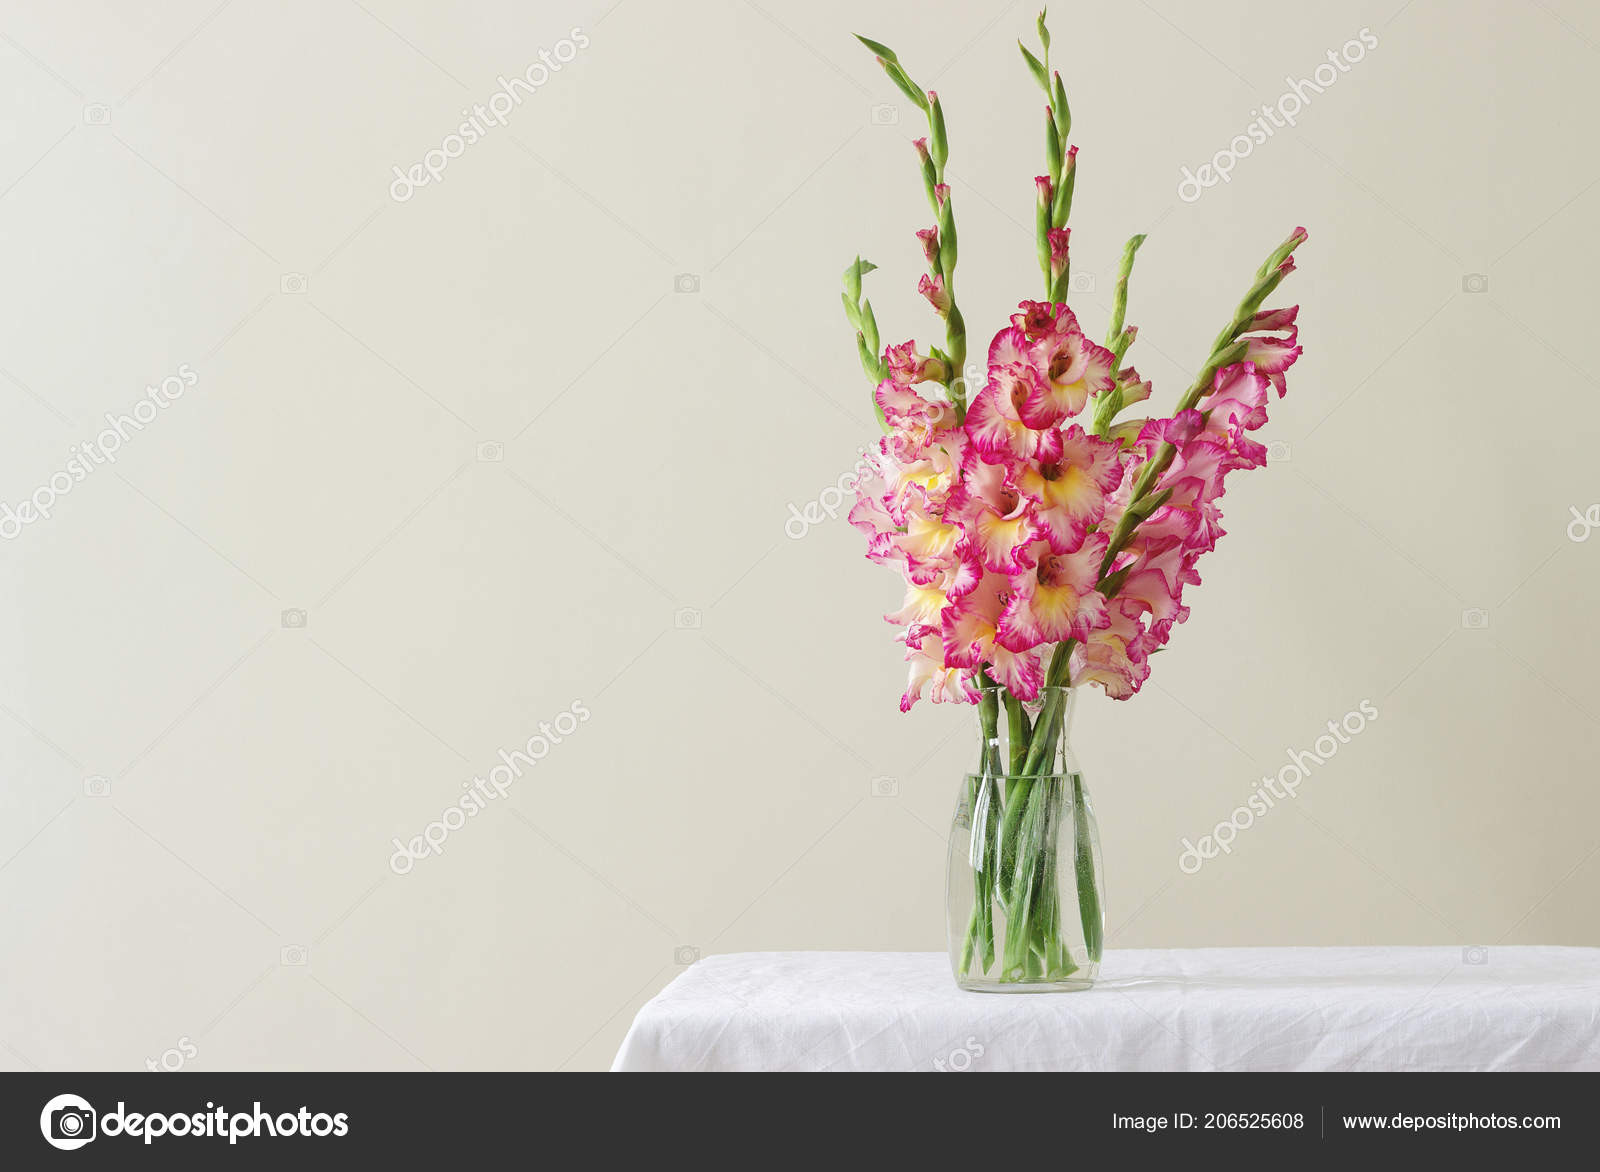 27 Trendy Light Pink Glass Vase 2024 free download light pink glass vase of bouquet multicolored gladioli glass vase light background greeting within a bouquet of multicolored gladioli in a glass vase on a light background greeting card sele